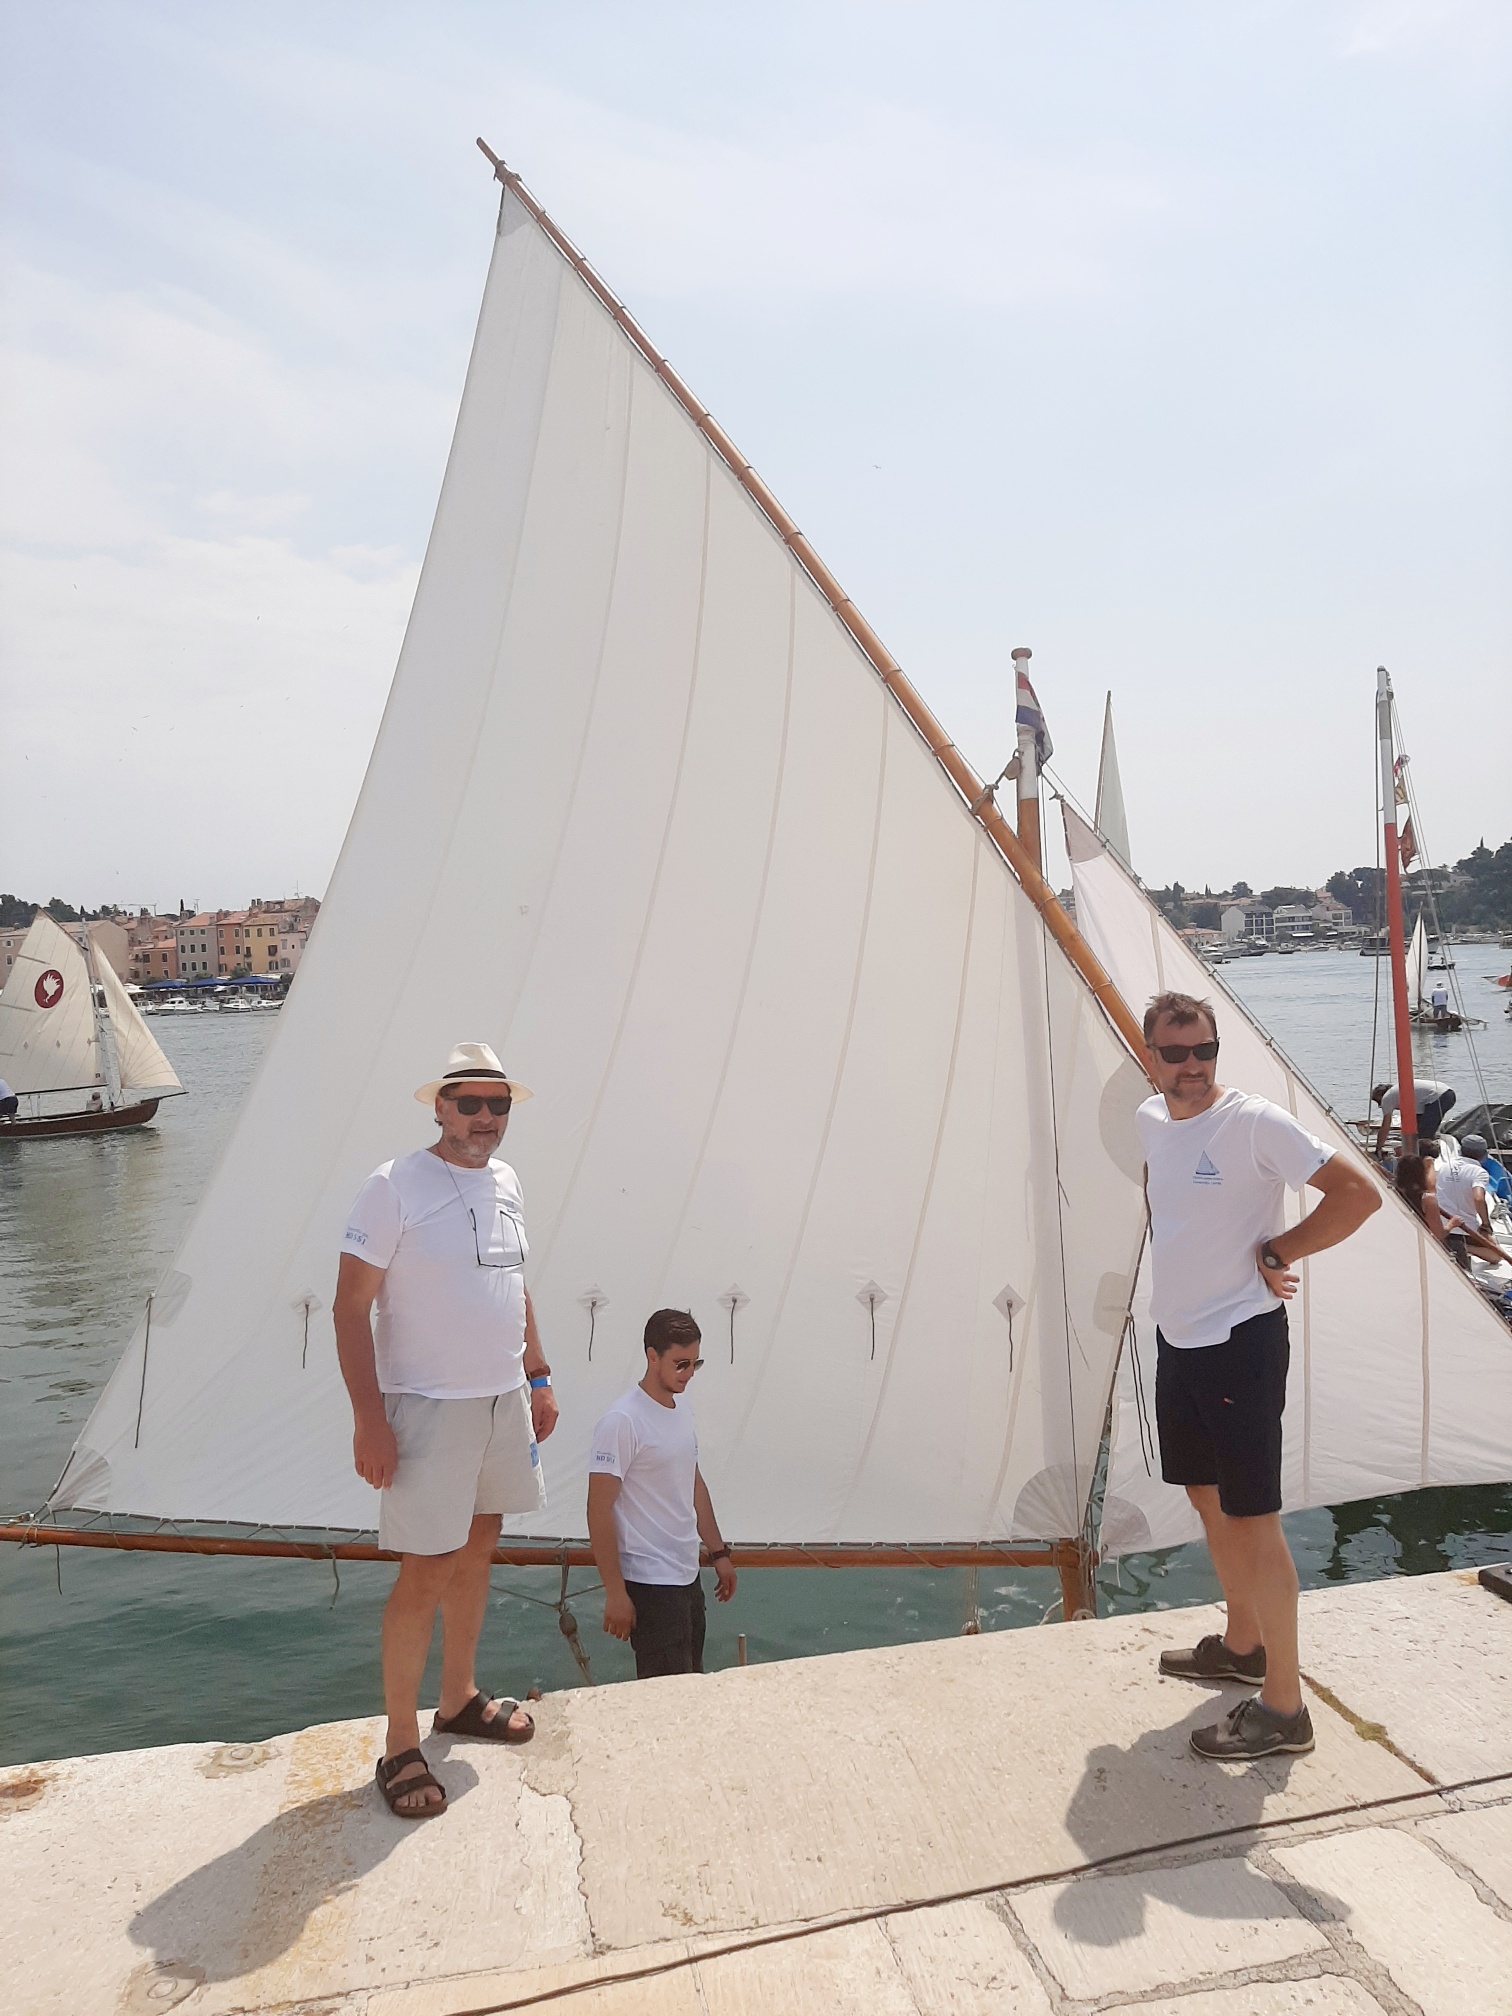 Crew from the Rovinj regatta